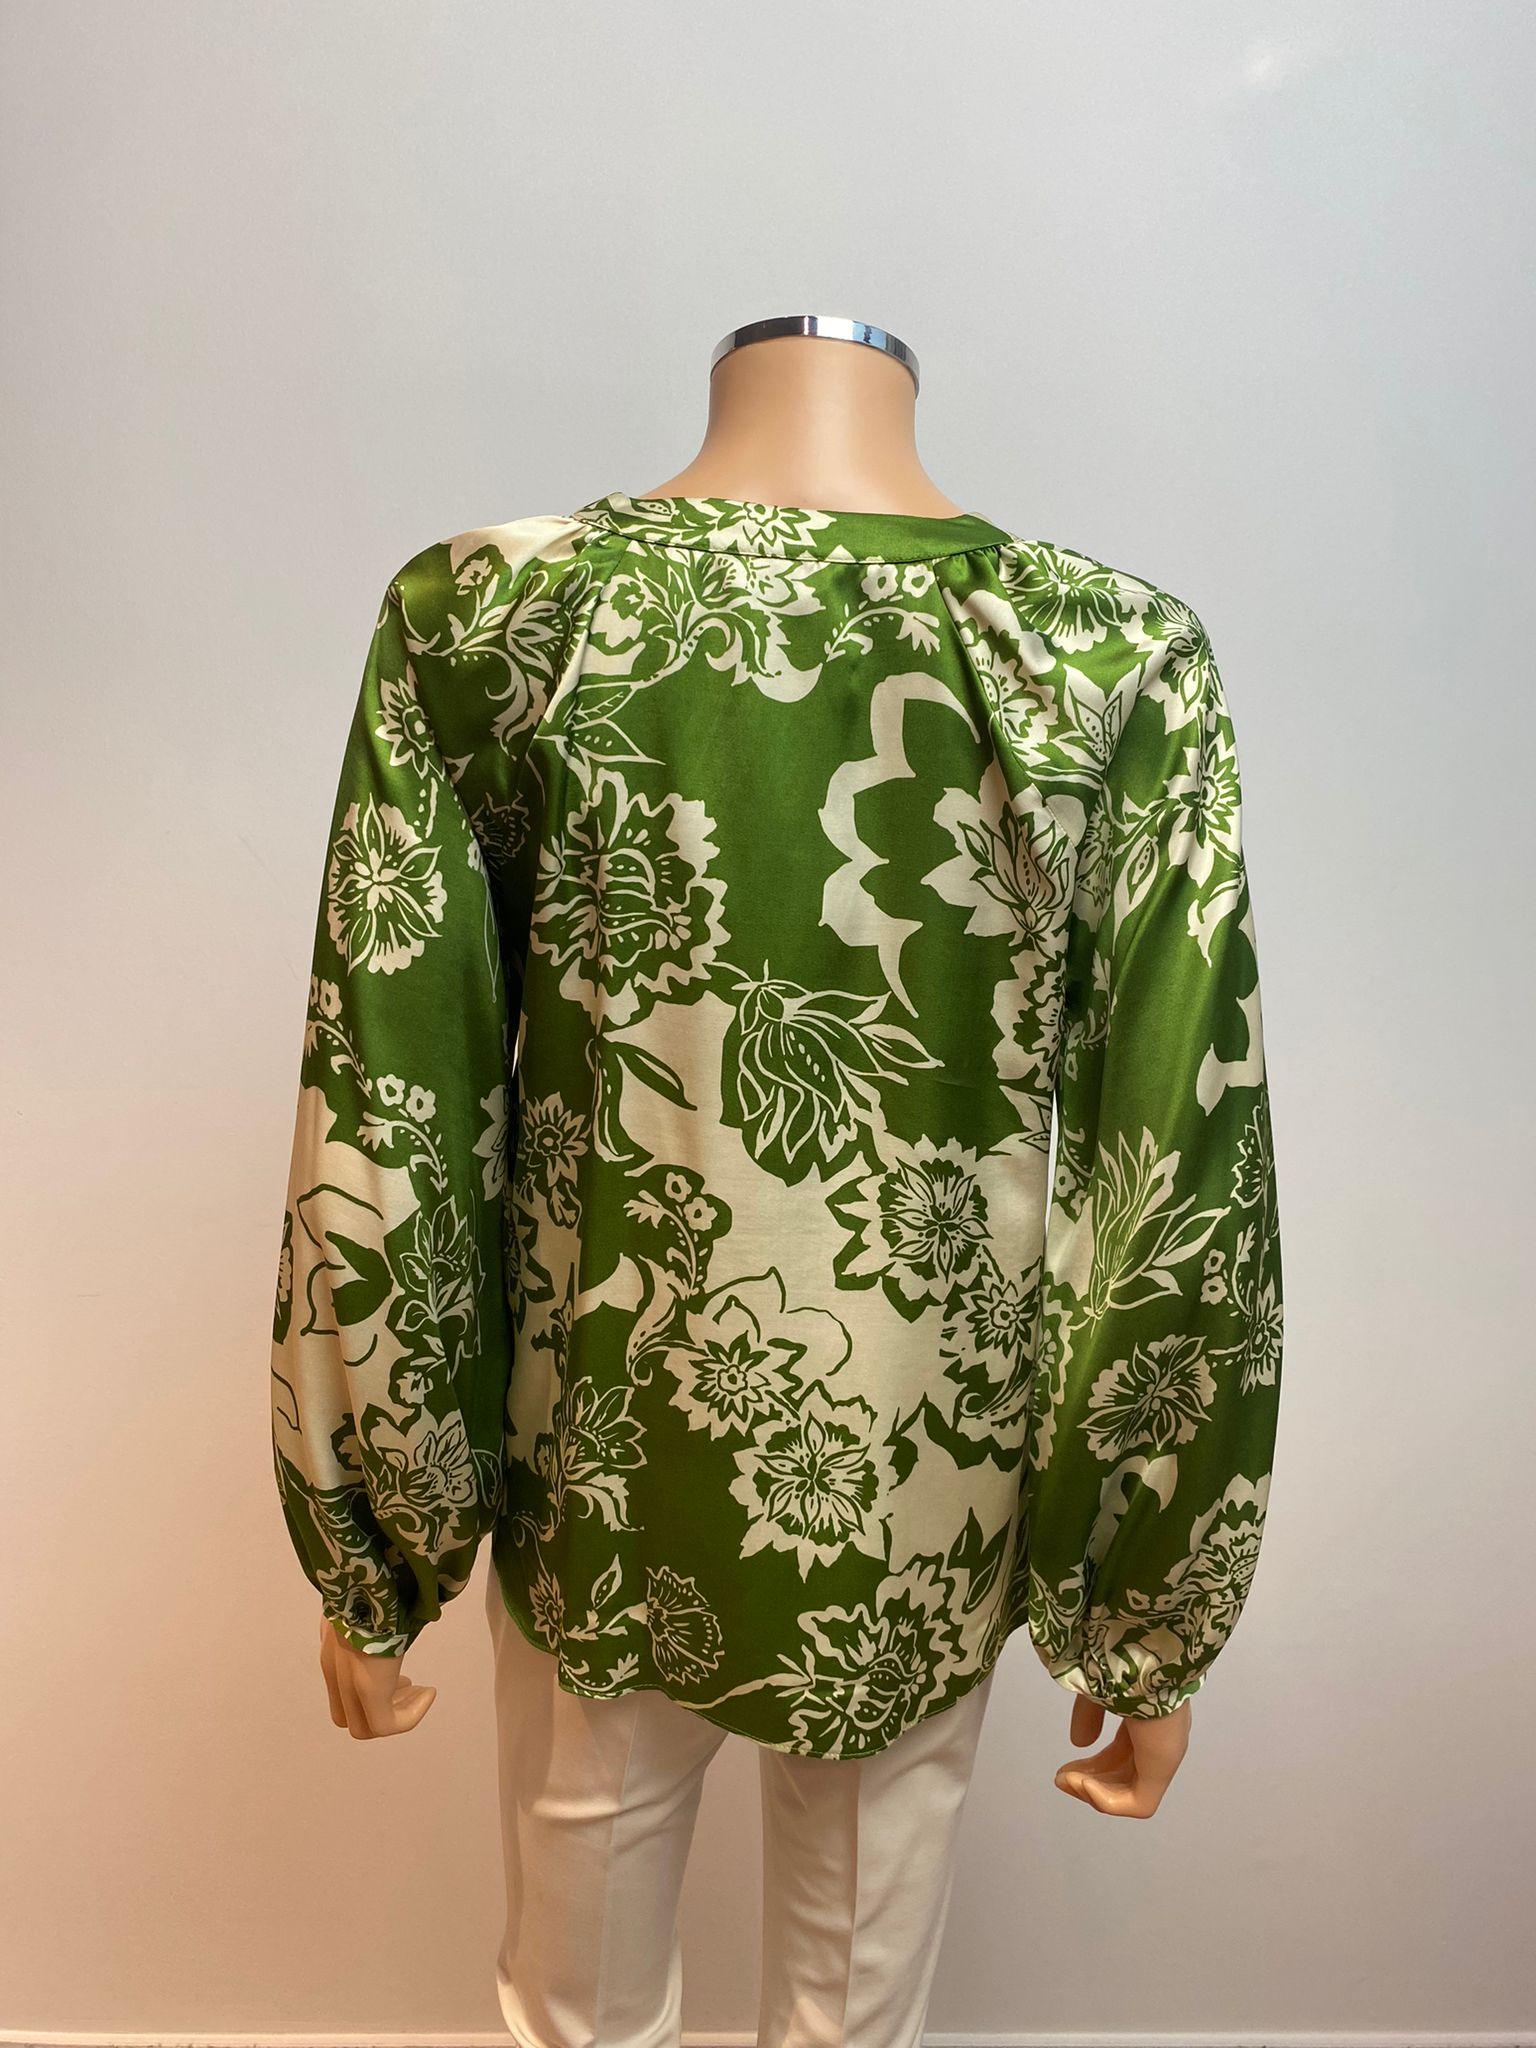 Bloes Groen Atmos Fashion ( 9287 Vago Moss ) - Delaere Womenswear